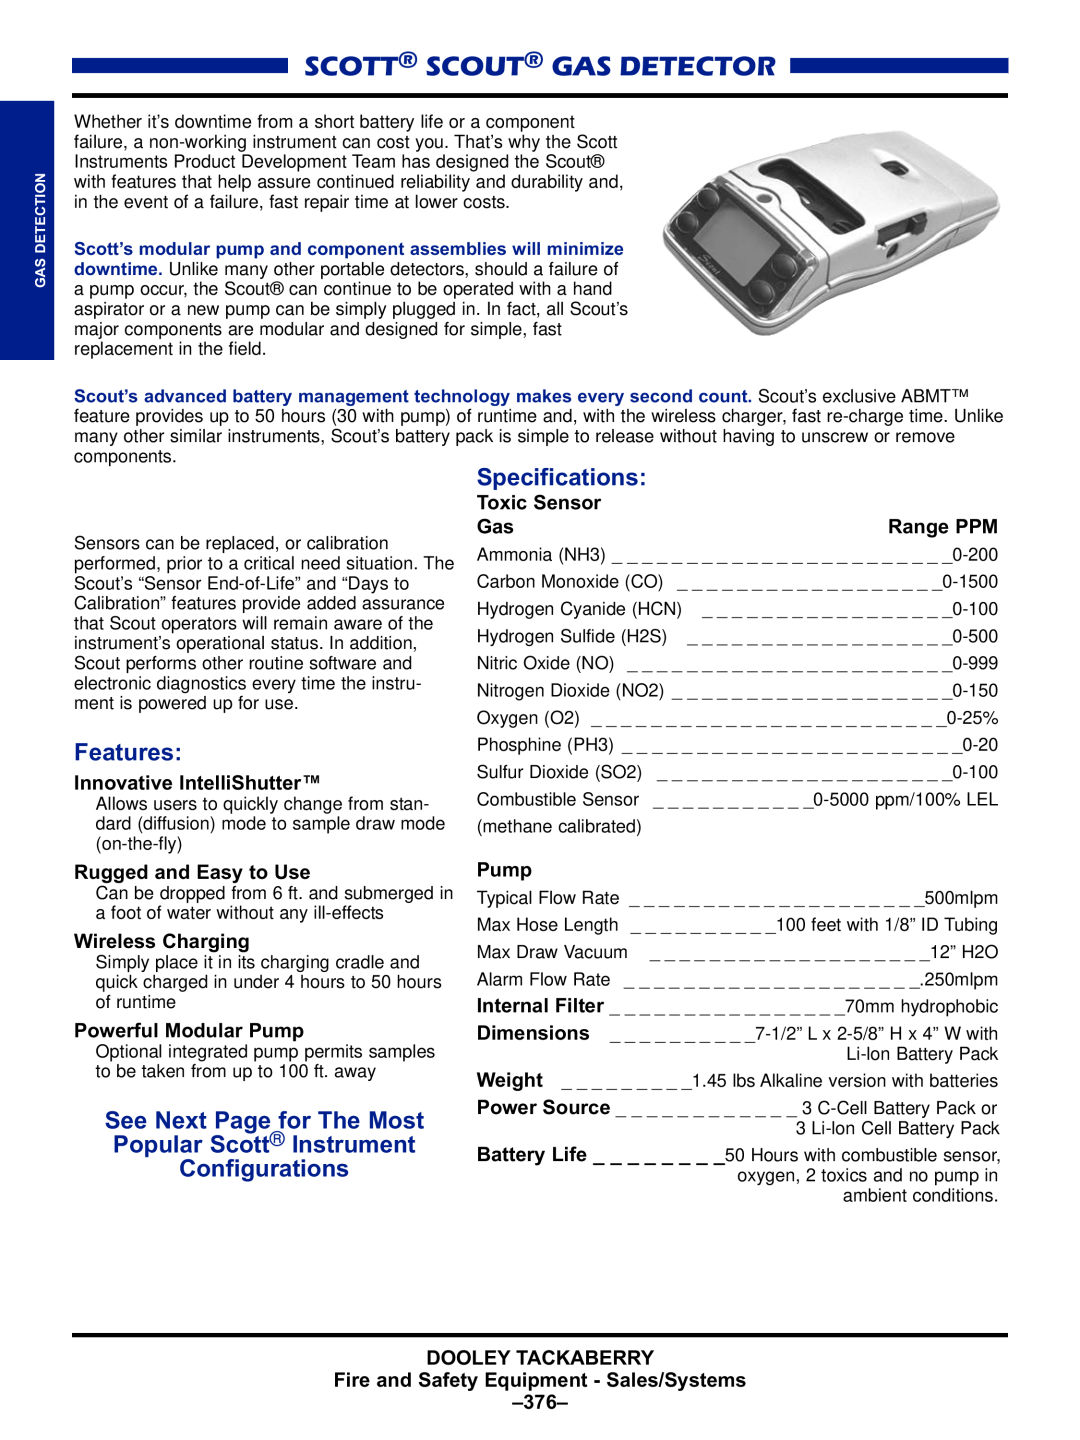 Black & Decker MULTI-GAS DETECTORS manual Scott Scout Gas Detector, Specifications, Features, Configurations 